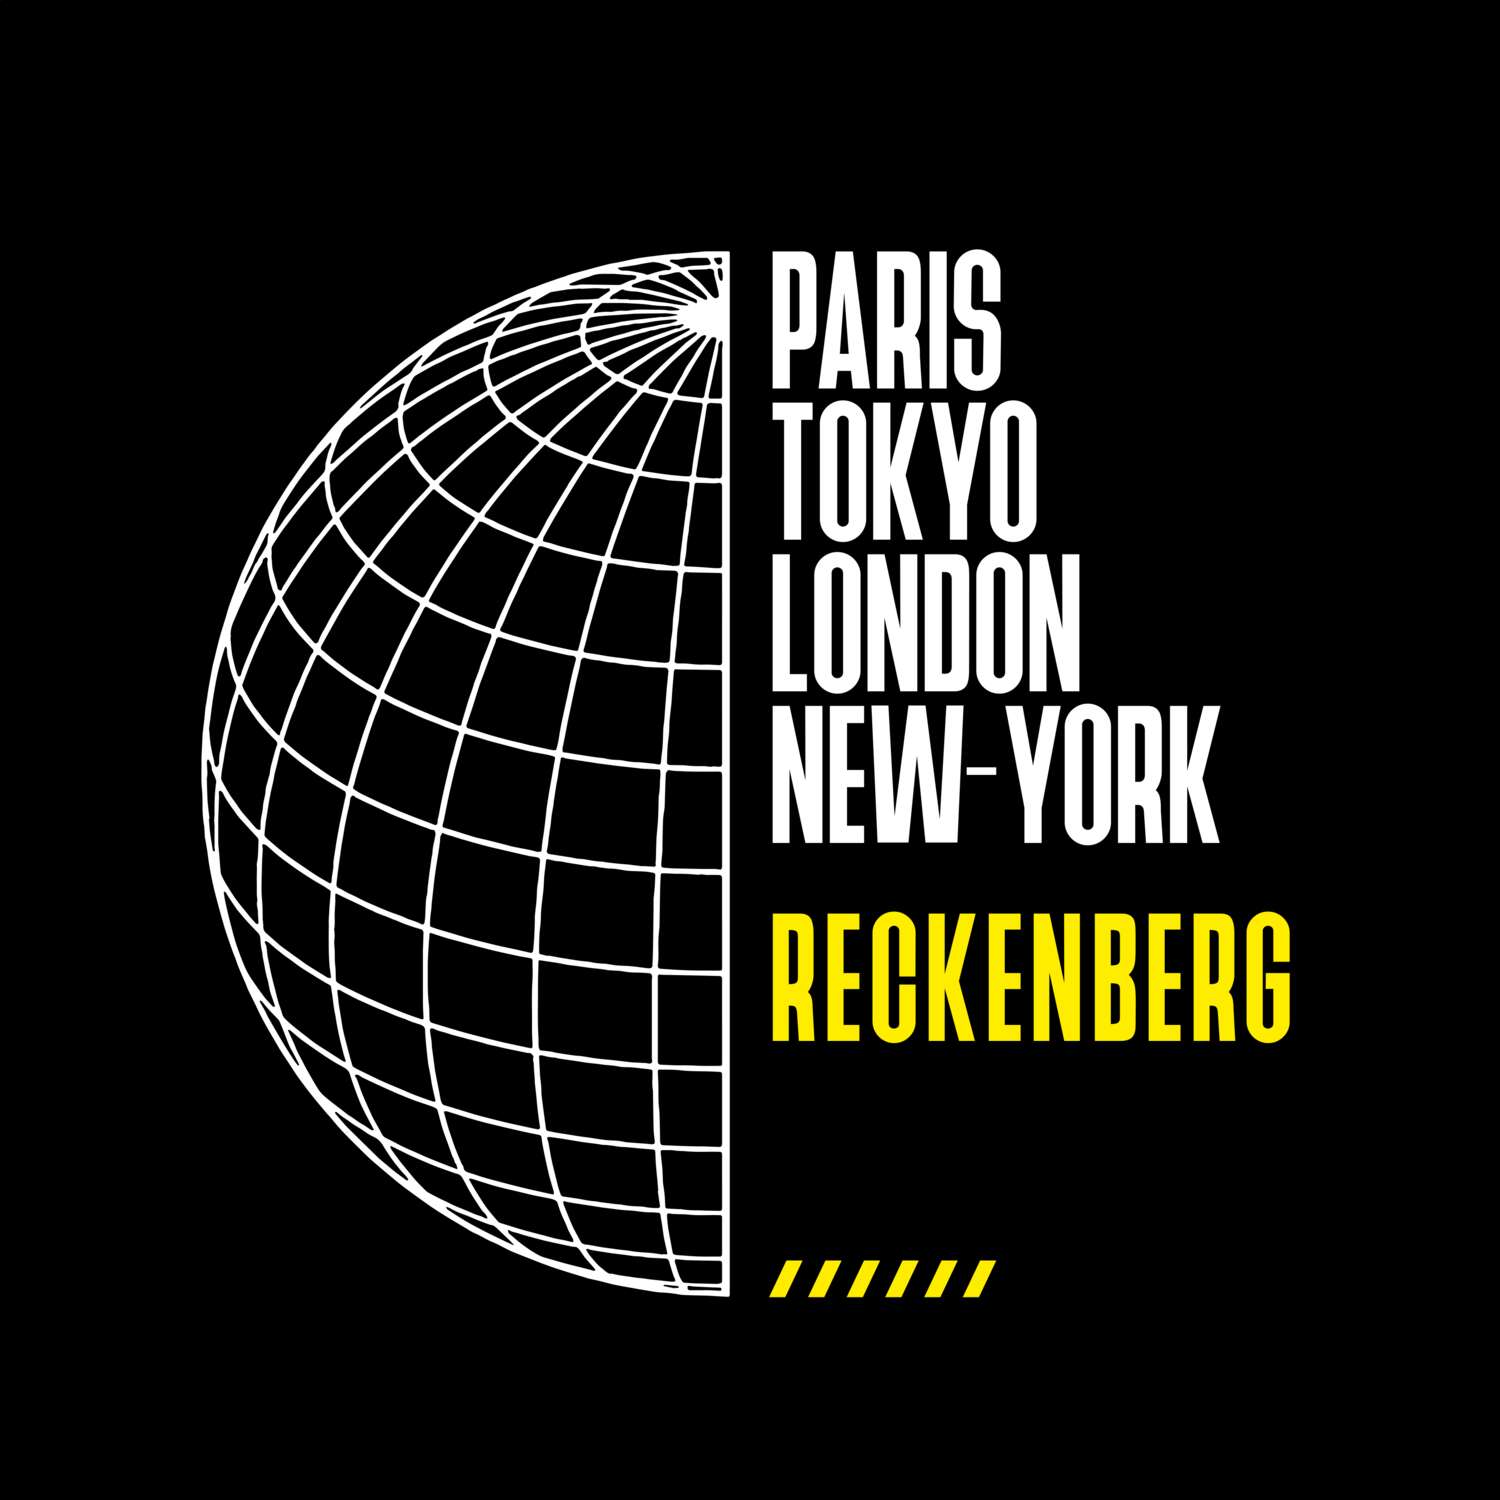 Reckenberg T-Shirt »Paris Tokyo London«